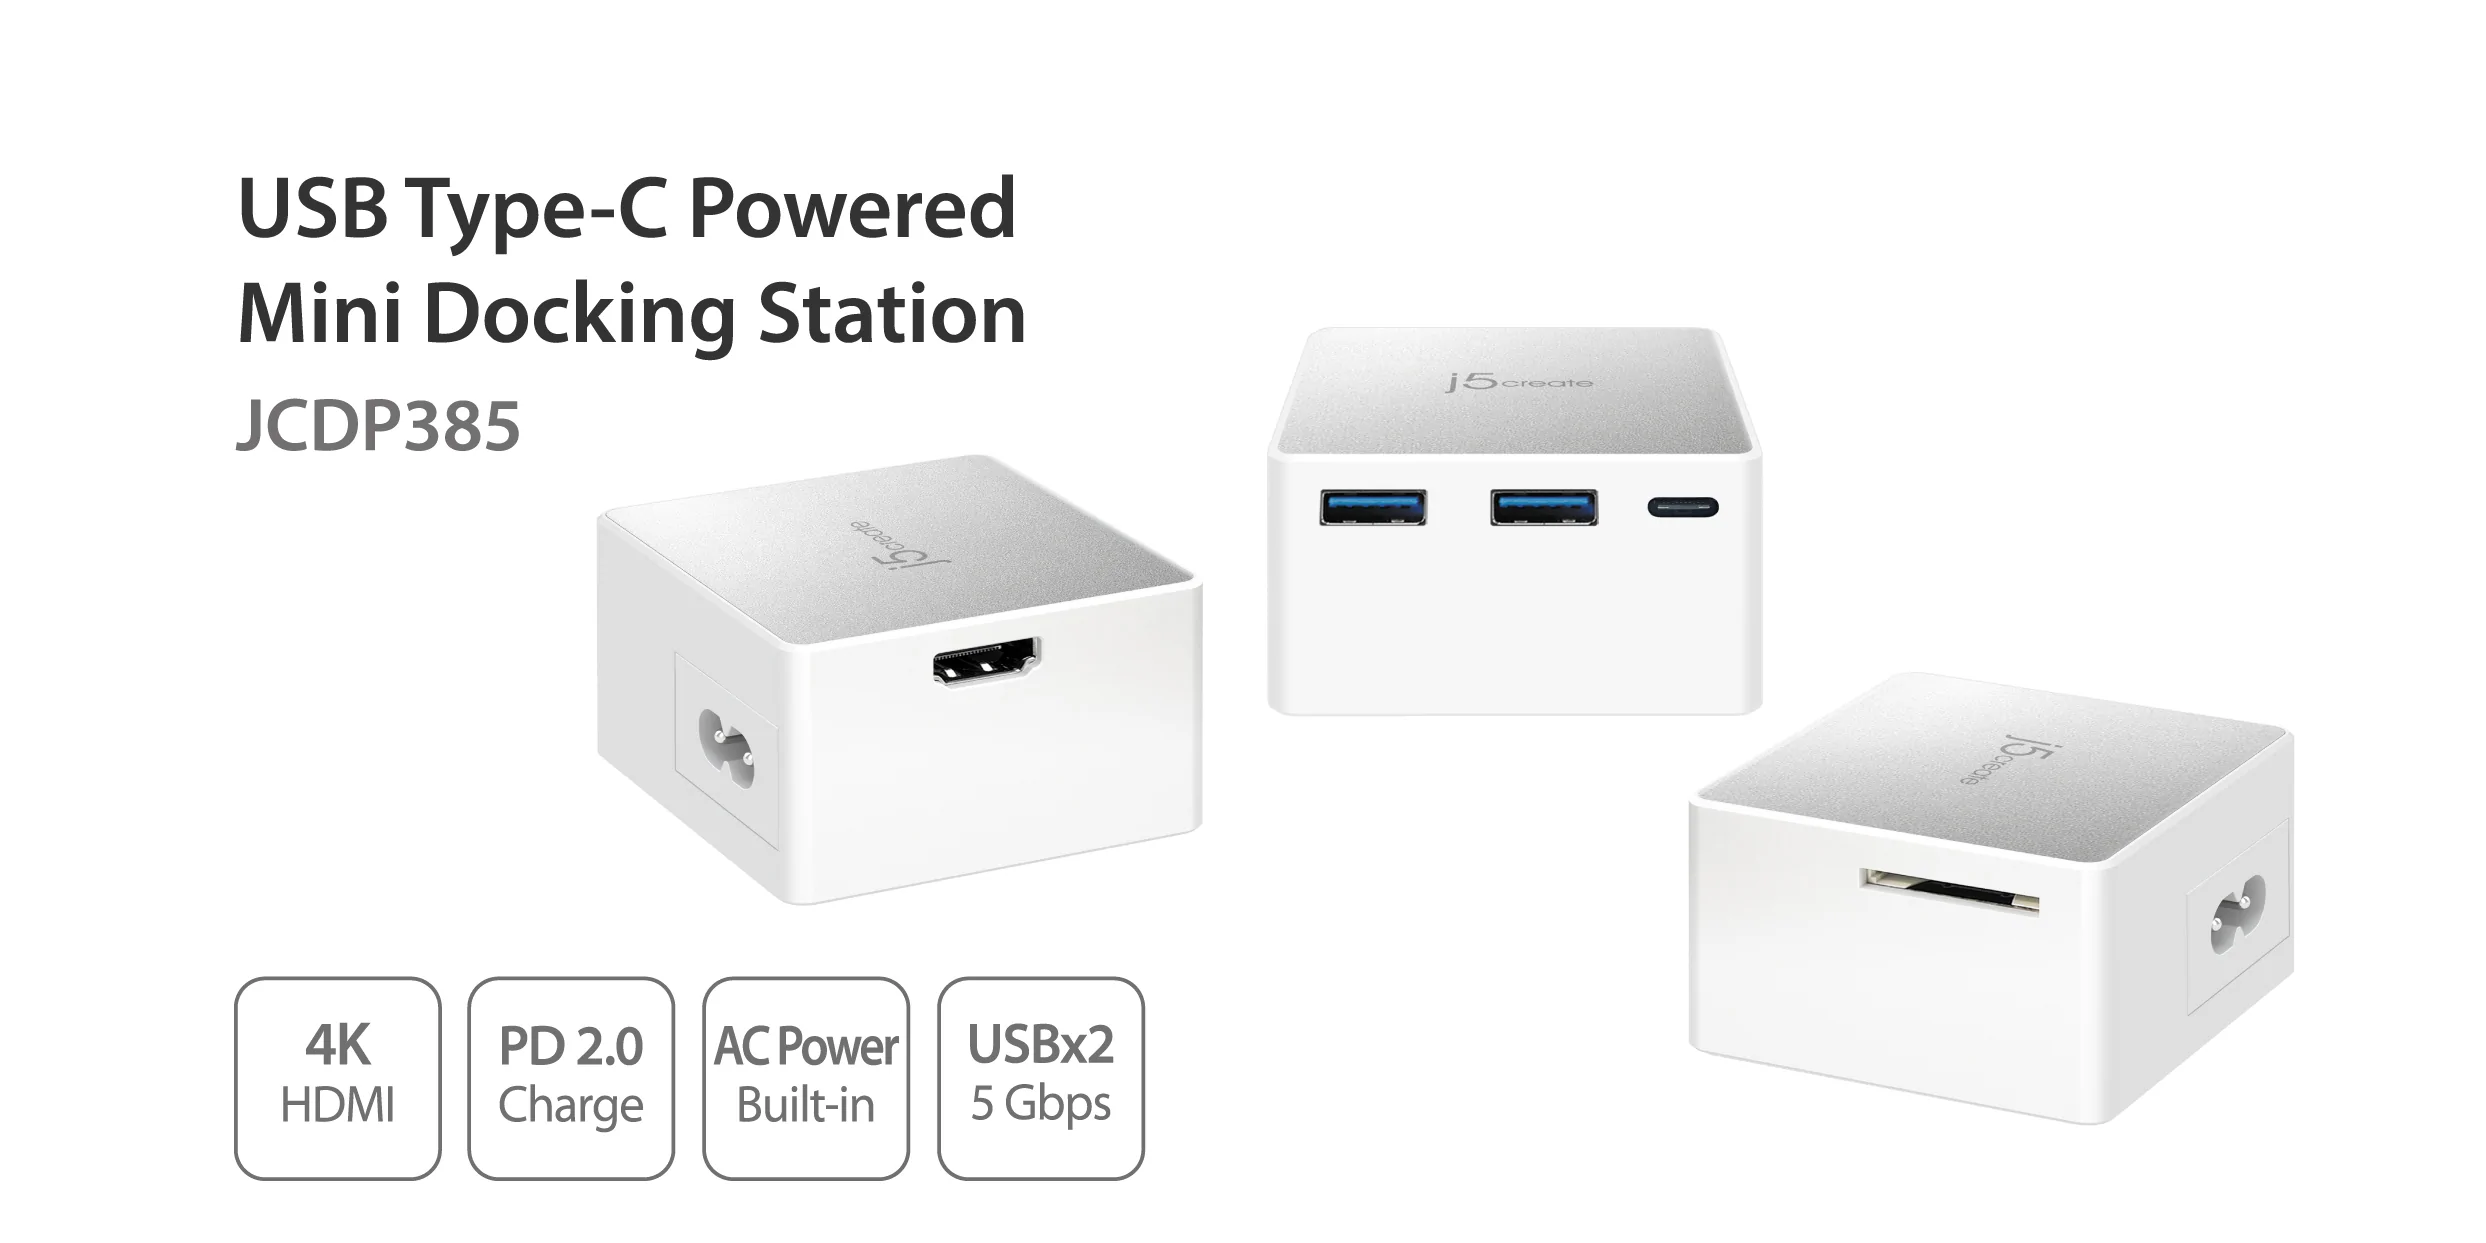 J5 Create USB C Powered Mini Docking Station - JCDP385